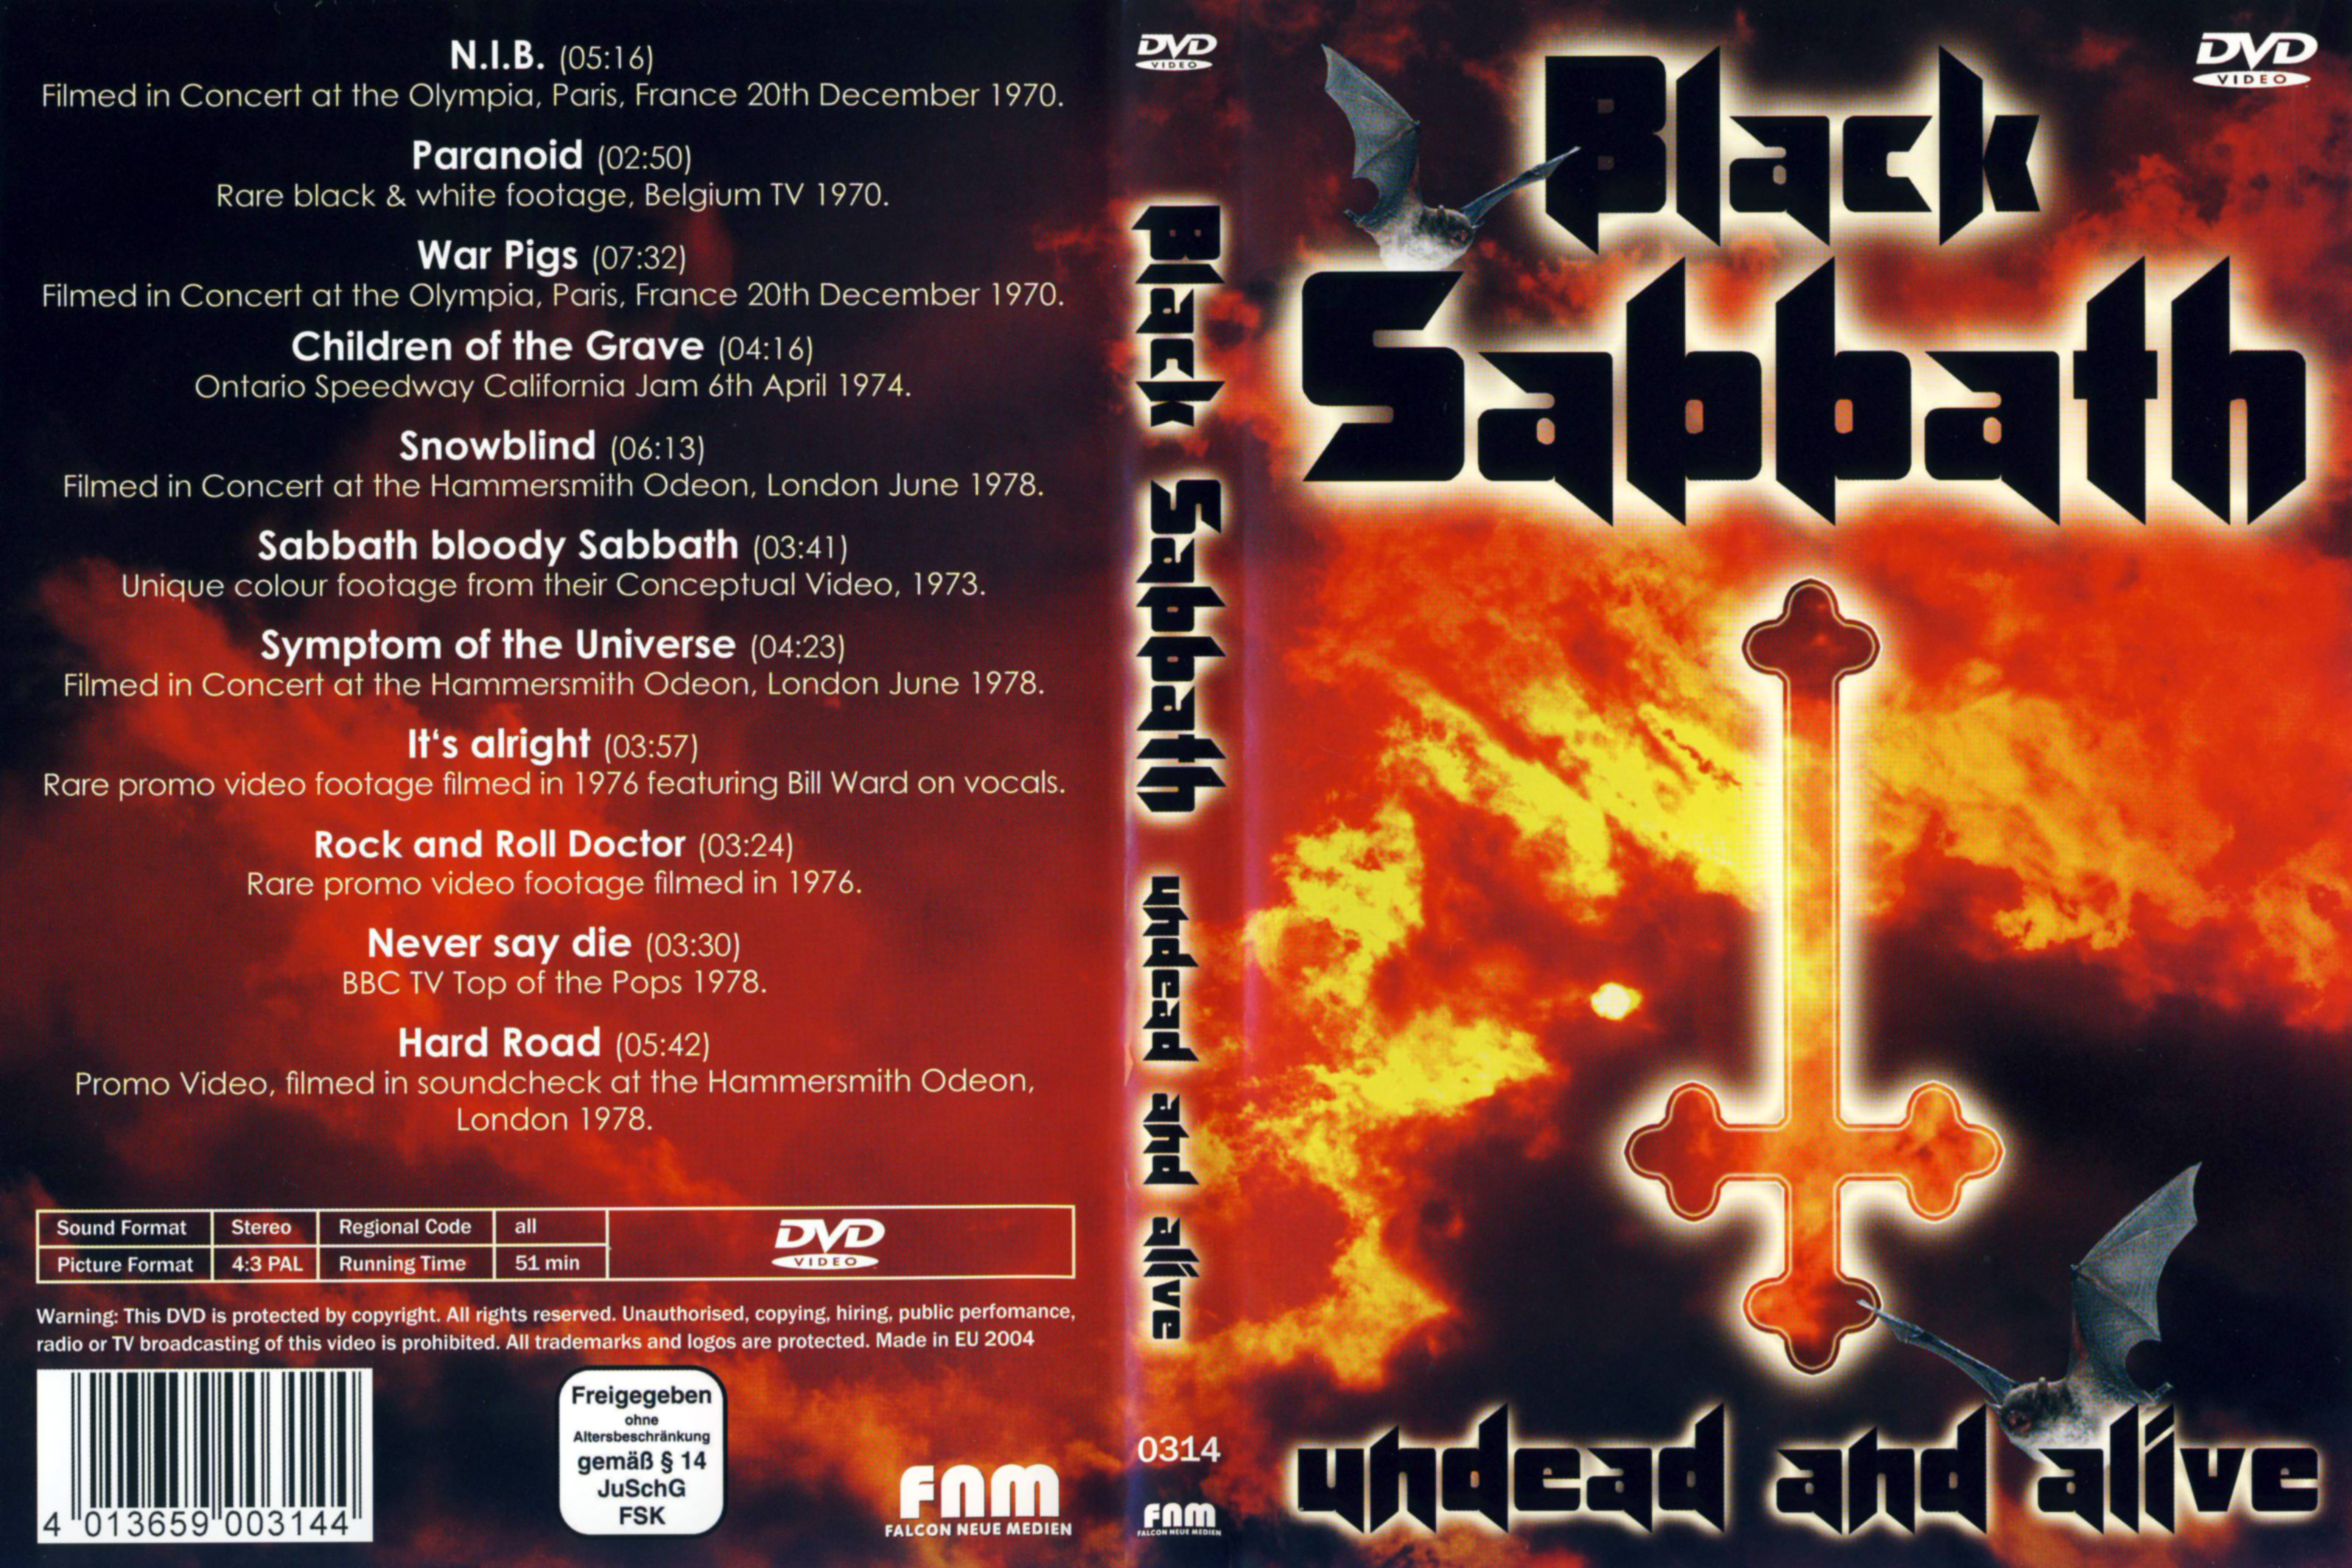 Jaquette DVD Black Sabbath - Undead and alive